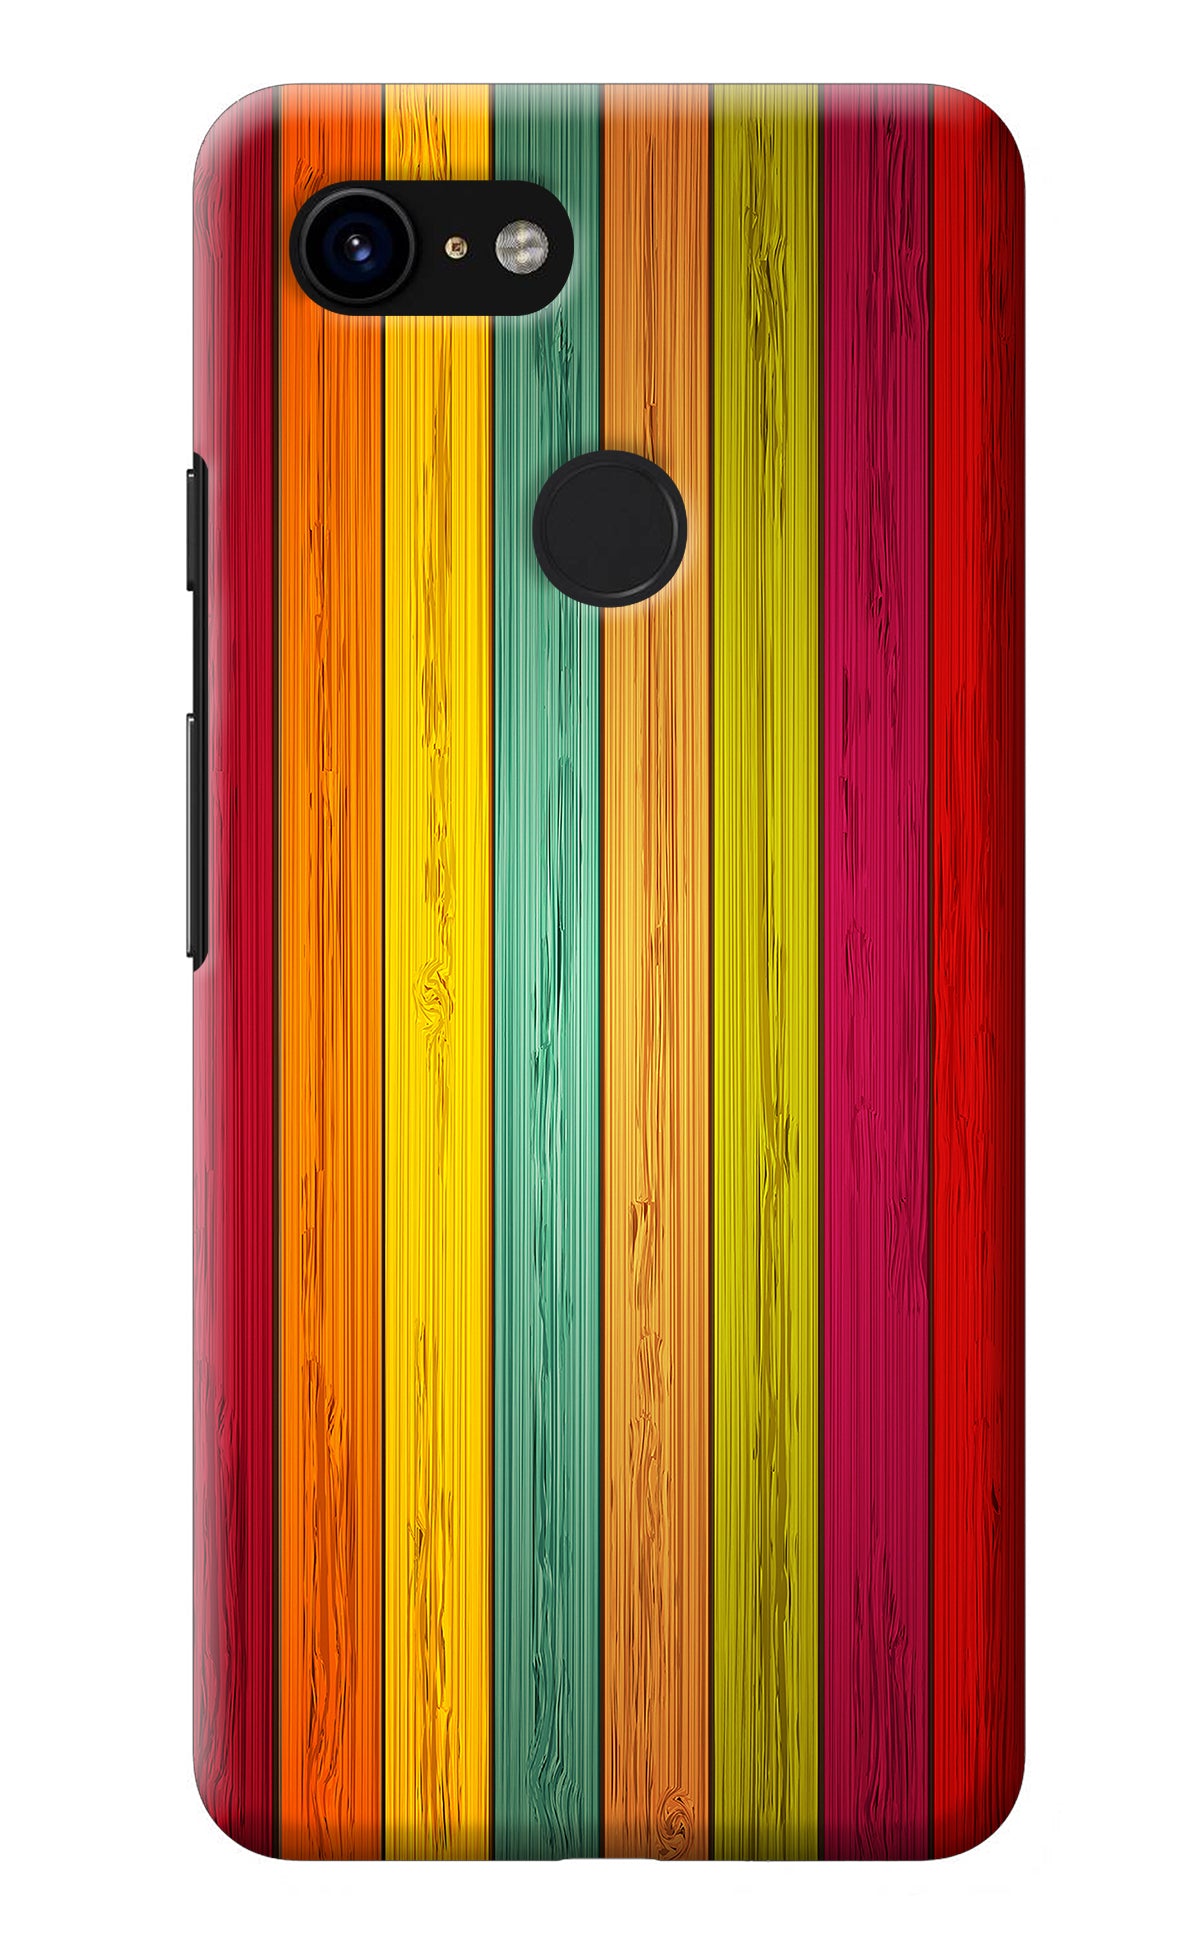 Multicolor Wooden Google Pixel 3 Back Cover